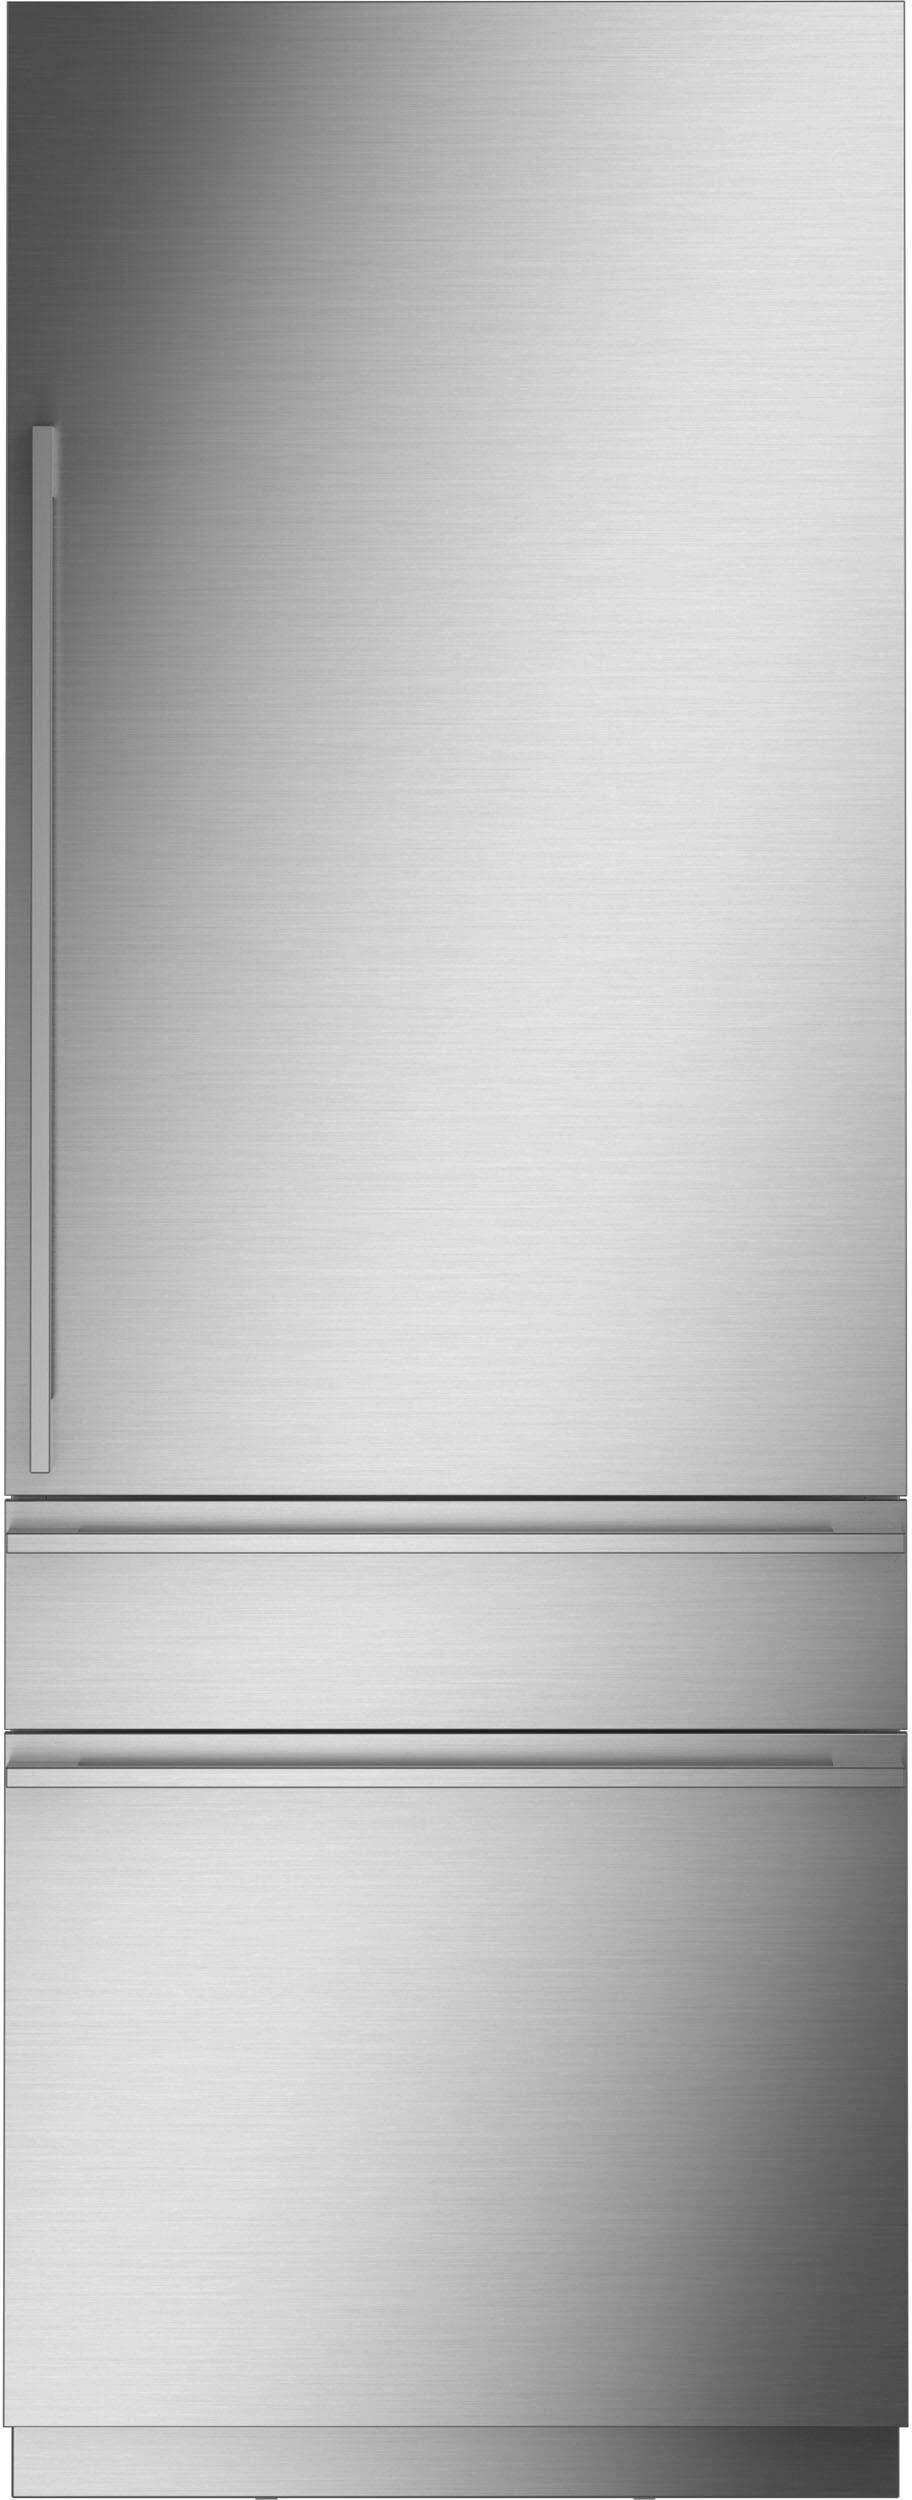 Monogram 30 Inch 30 Built In Counter Depth Bottom Freezer Refrigerator ZIC303NPPII